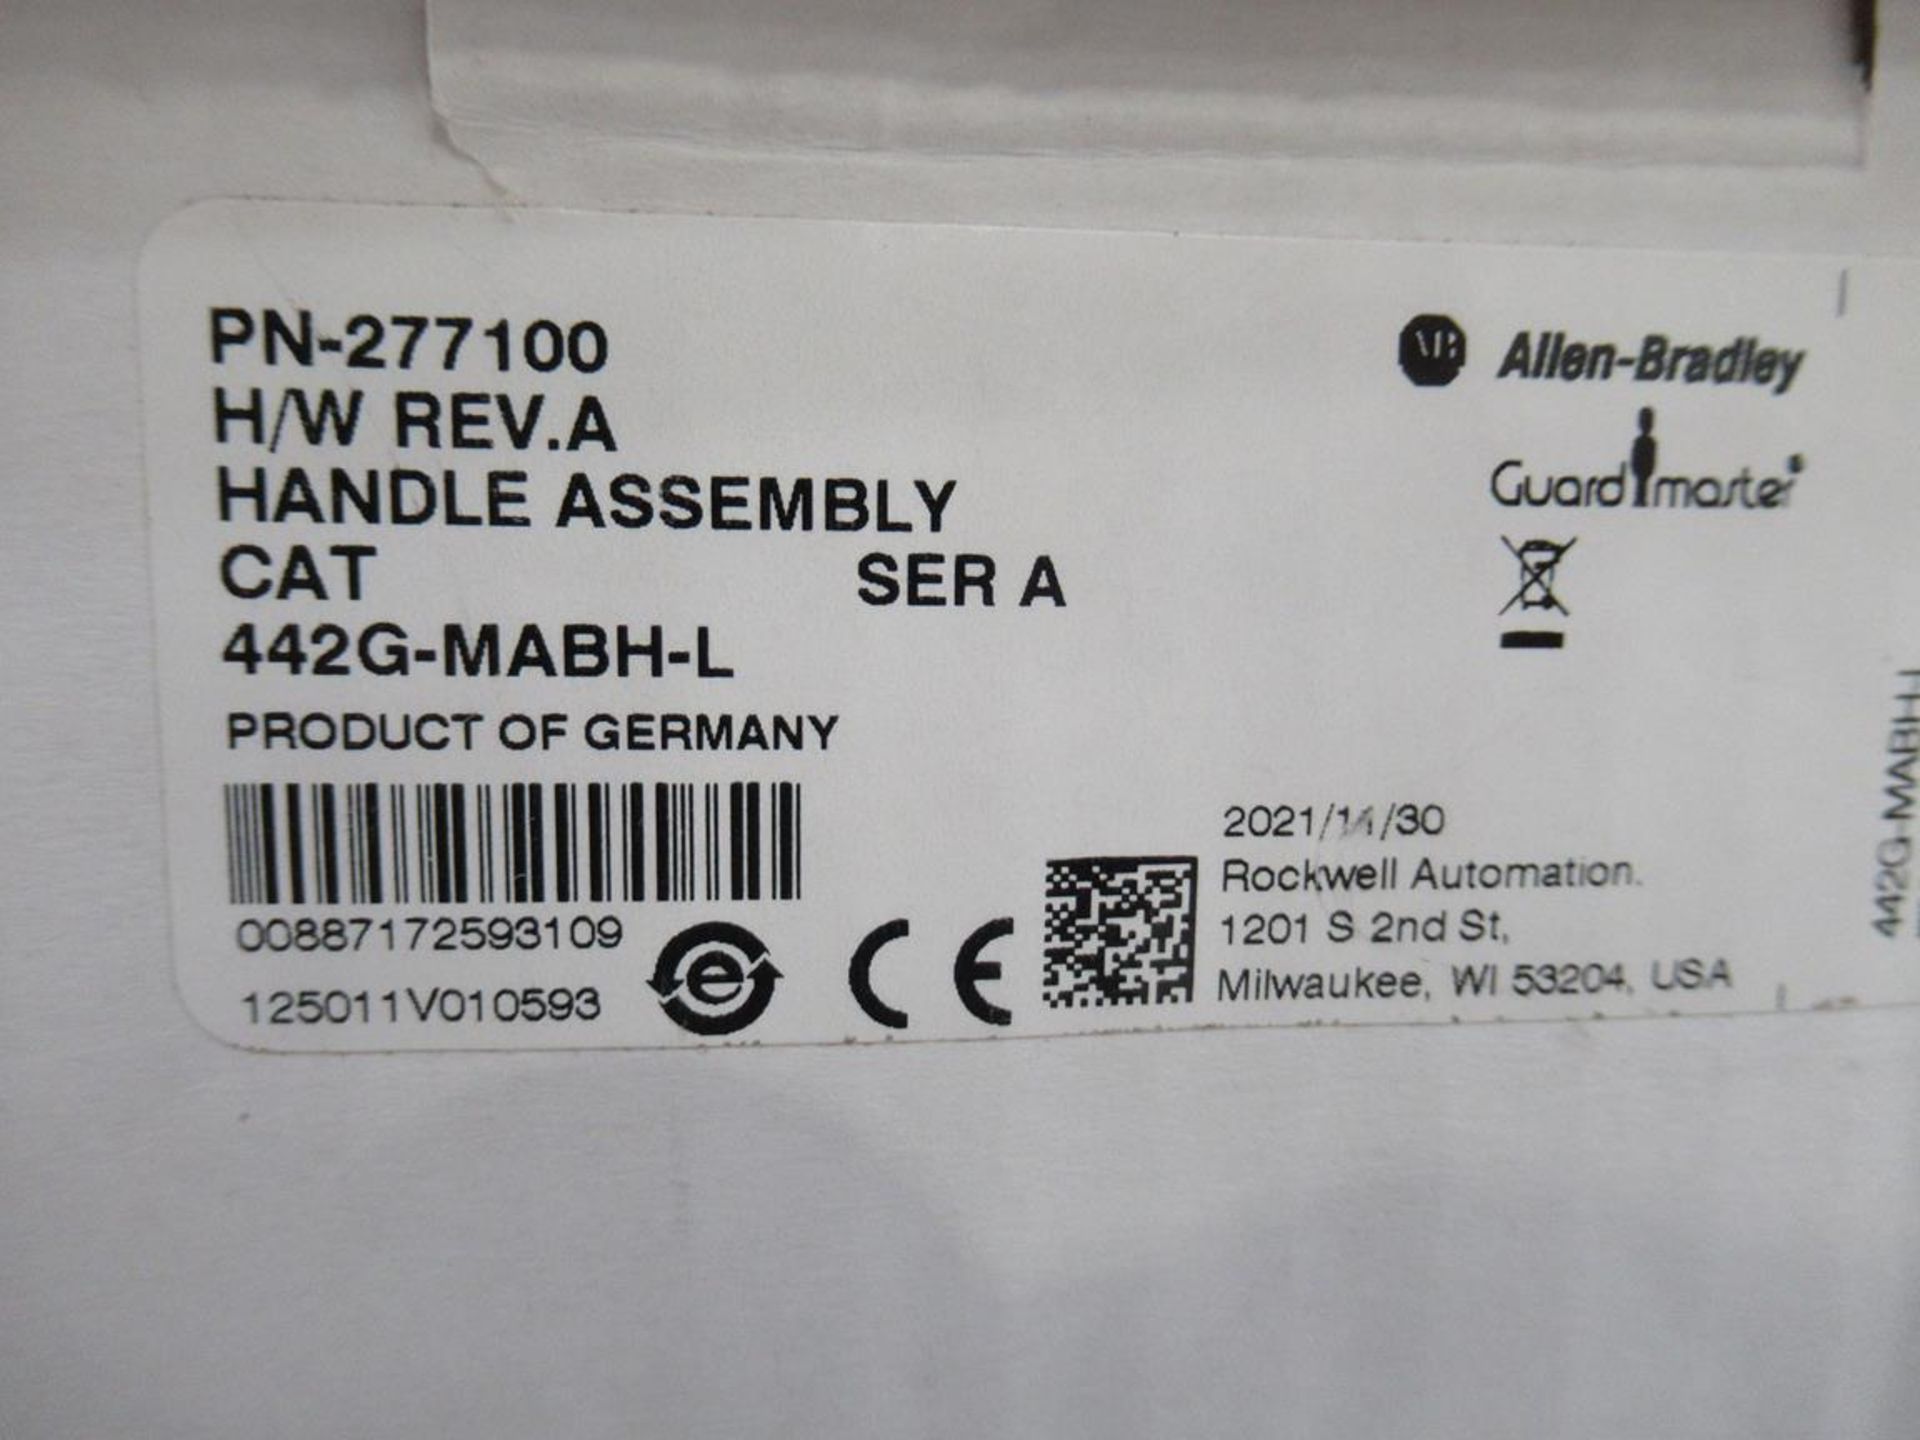 3x (no.) cartons Allen-Bradley, handle assemblys, Part No. 277100 - Image 6 of 6